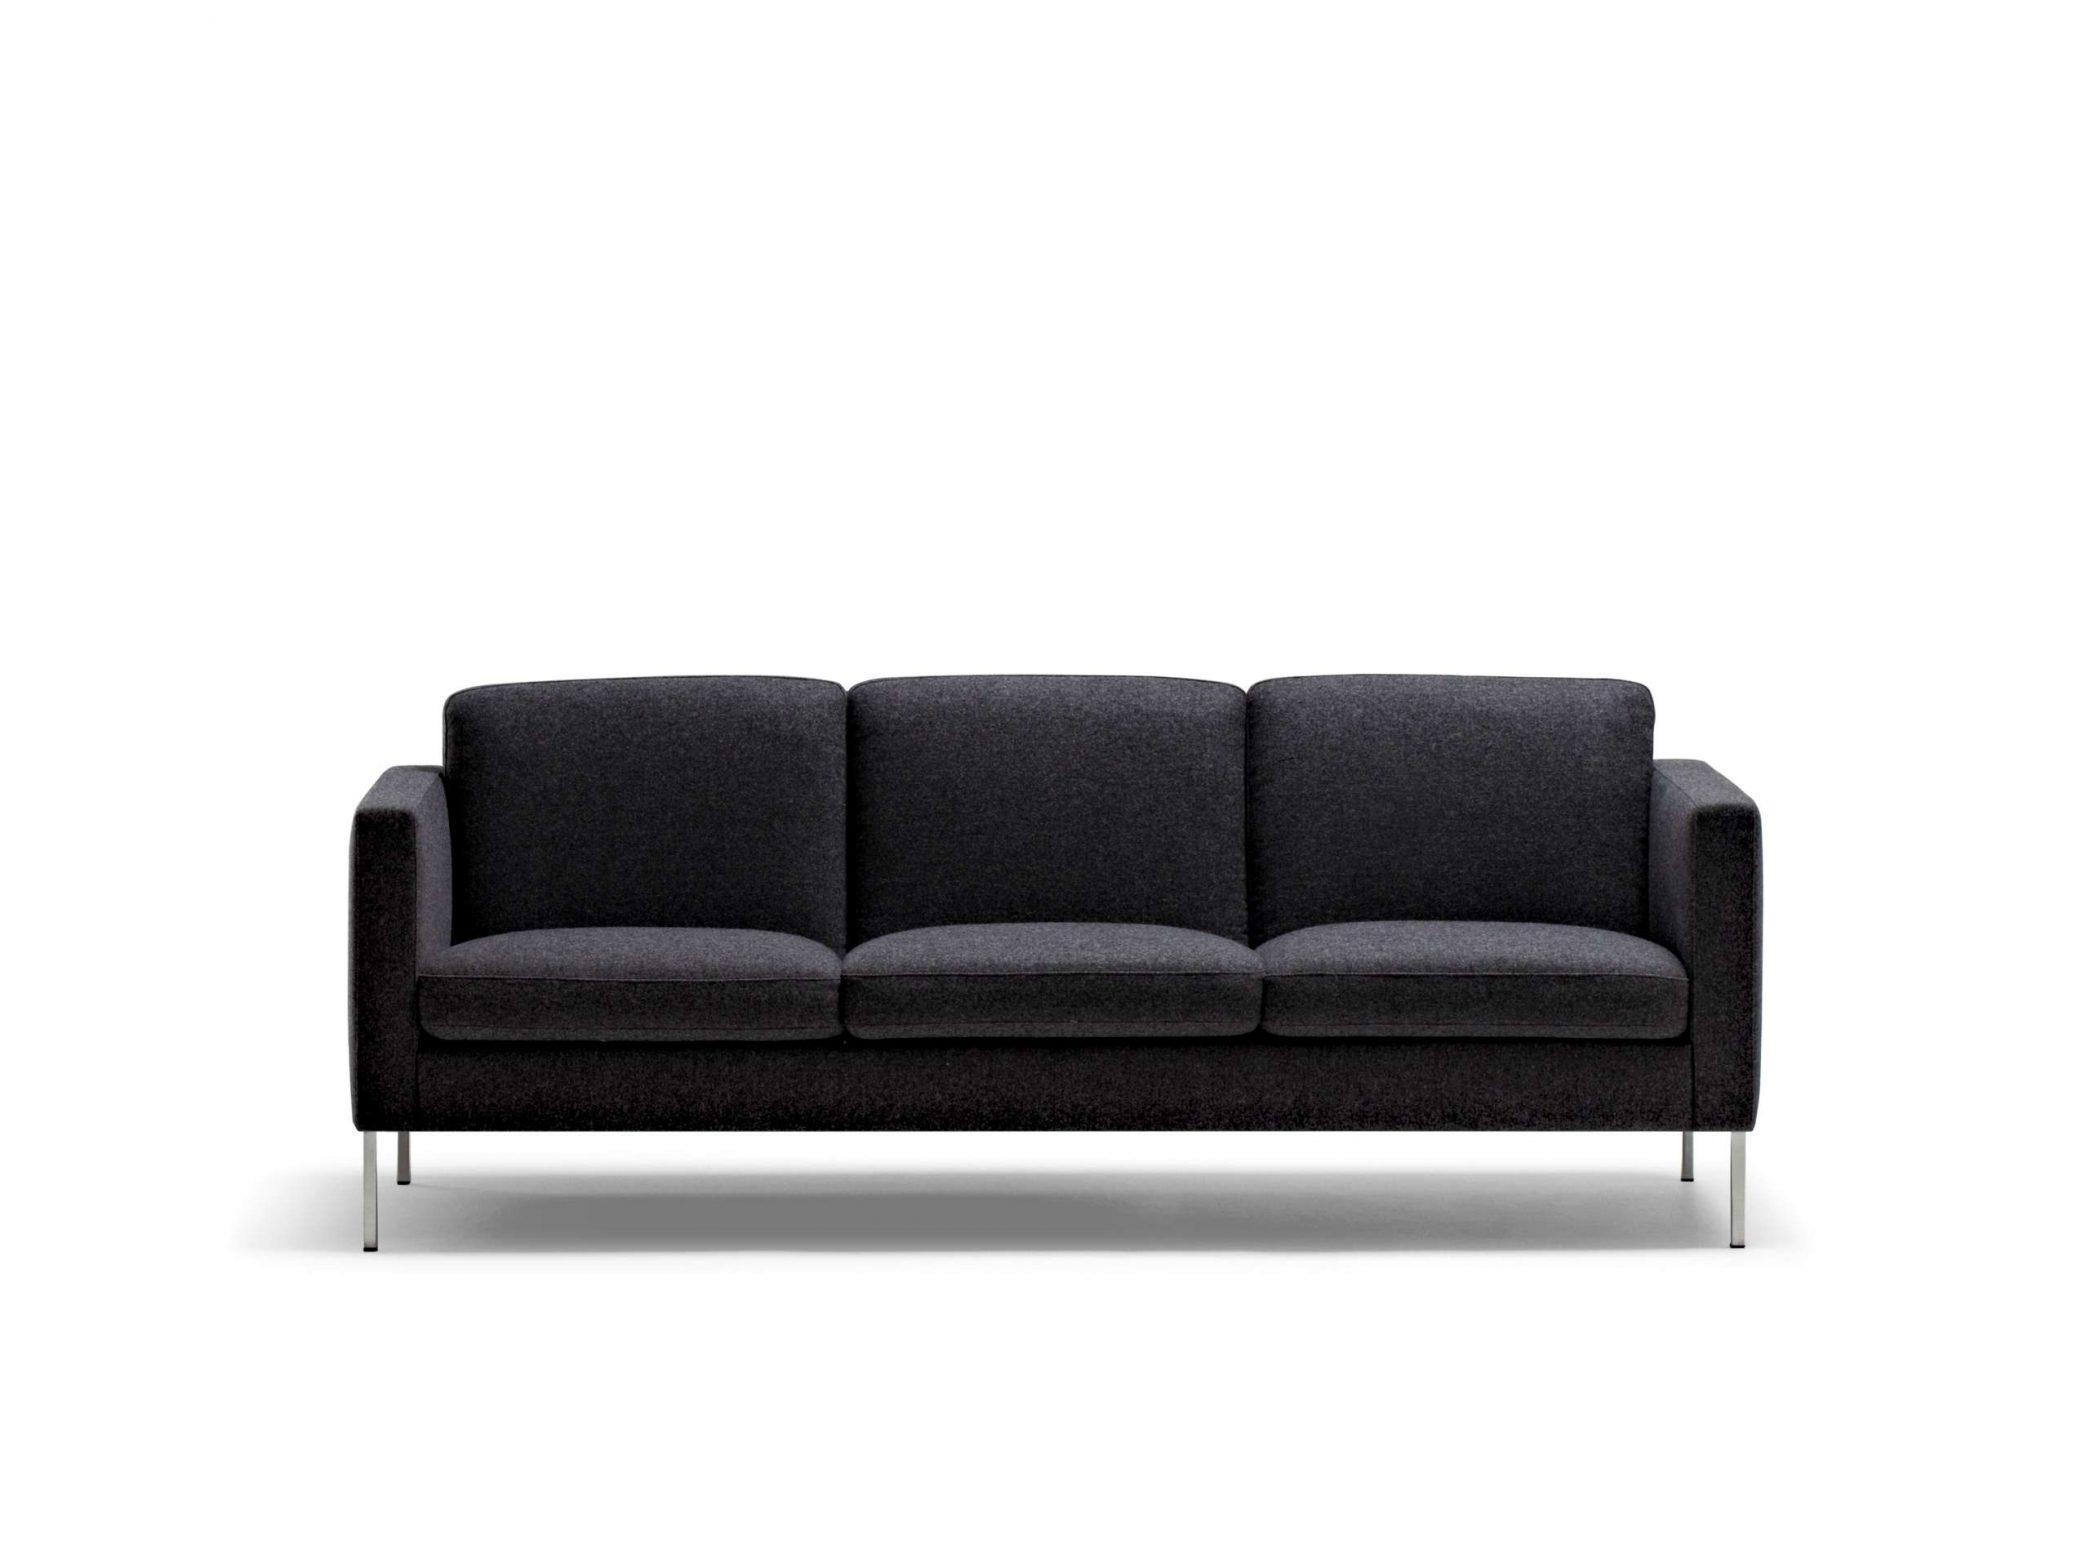 anytime-sofa-landscape-2090x1568